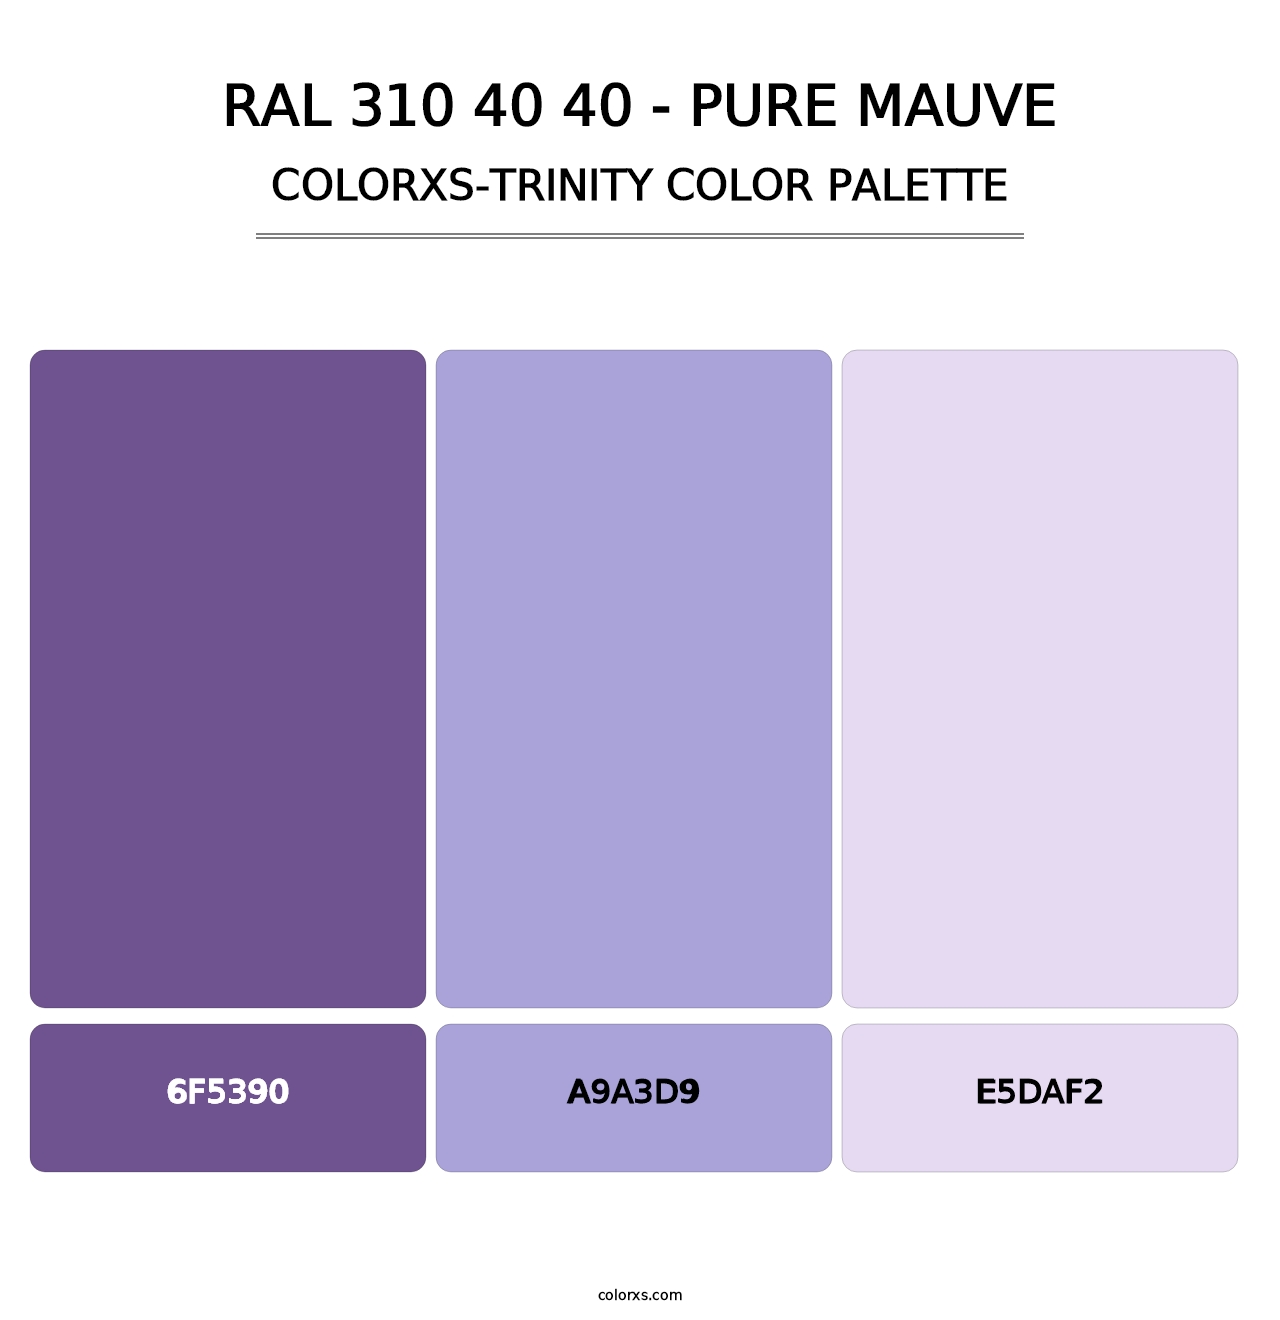 RAL 310 40 40 - Pure Mauve - Colorxs Trinity Palette